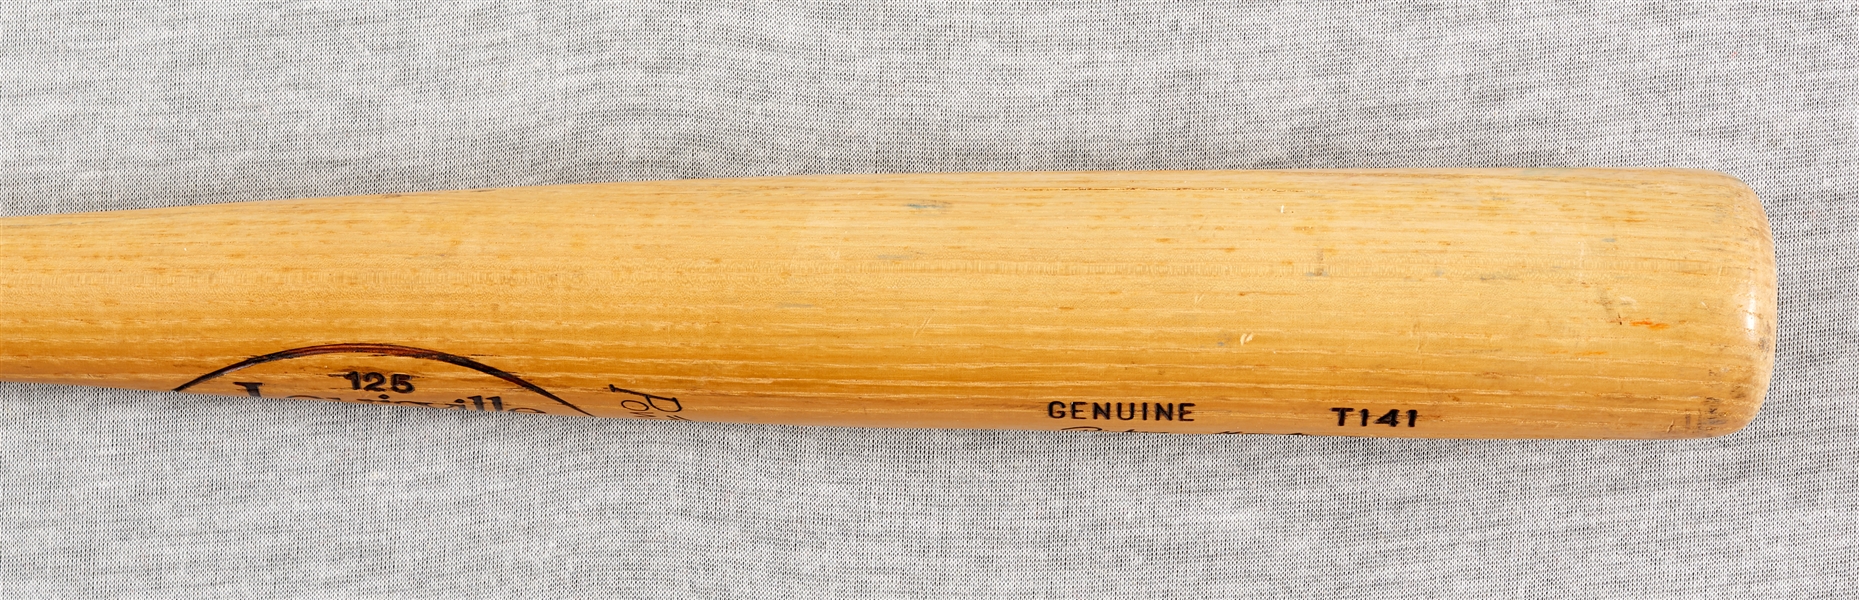 Rickey Henderson 1986-89 Game-Used & Signed Louisville Slugger Bat (BAS) (Graded PSA/DNA GU 9.5)